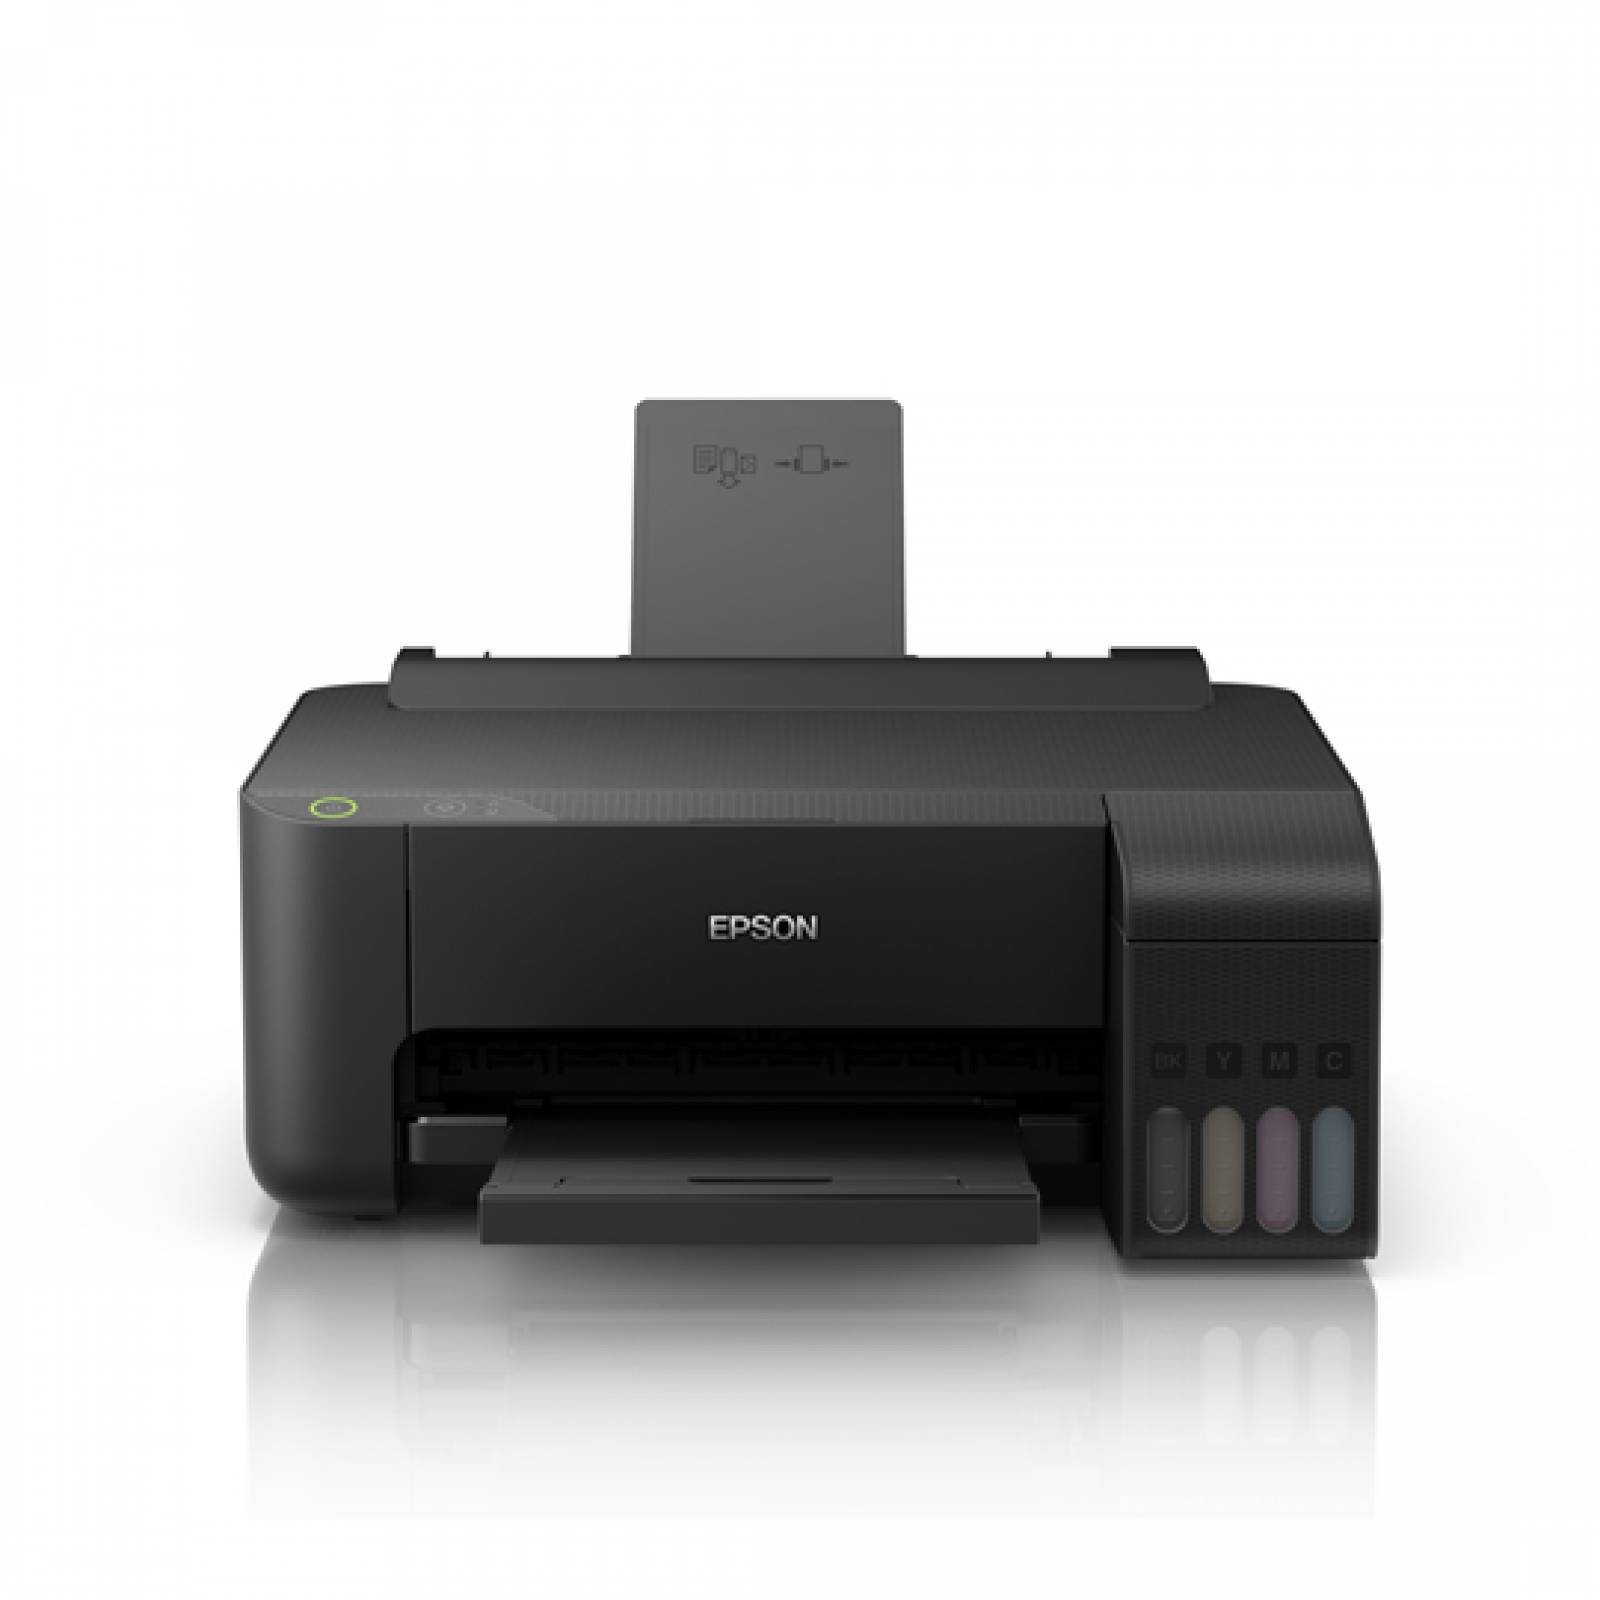 Impresora de tinta Epson L1110 - Color - 5760 x 1440dpi Impresión